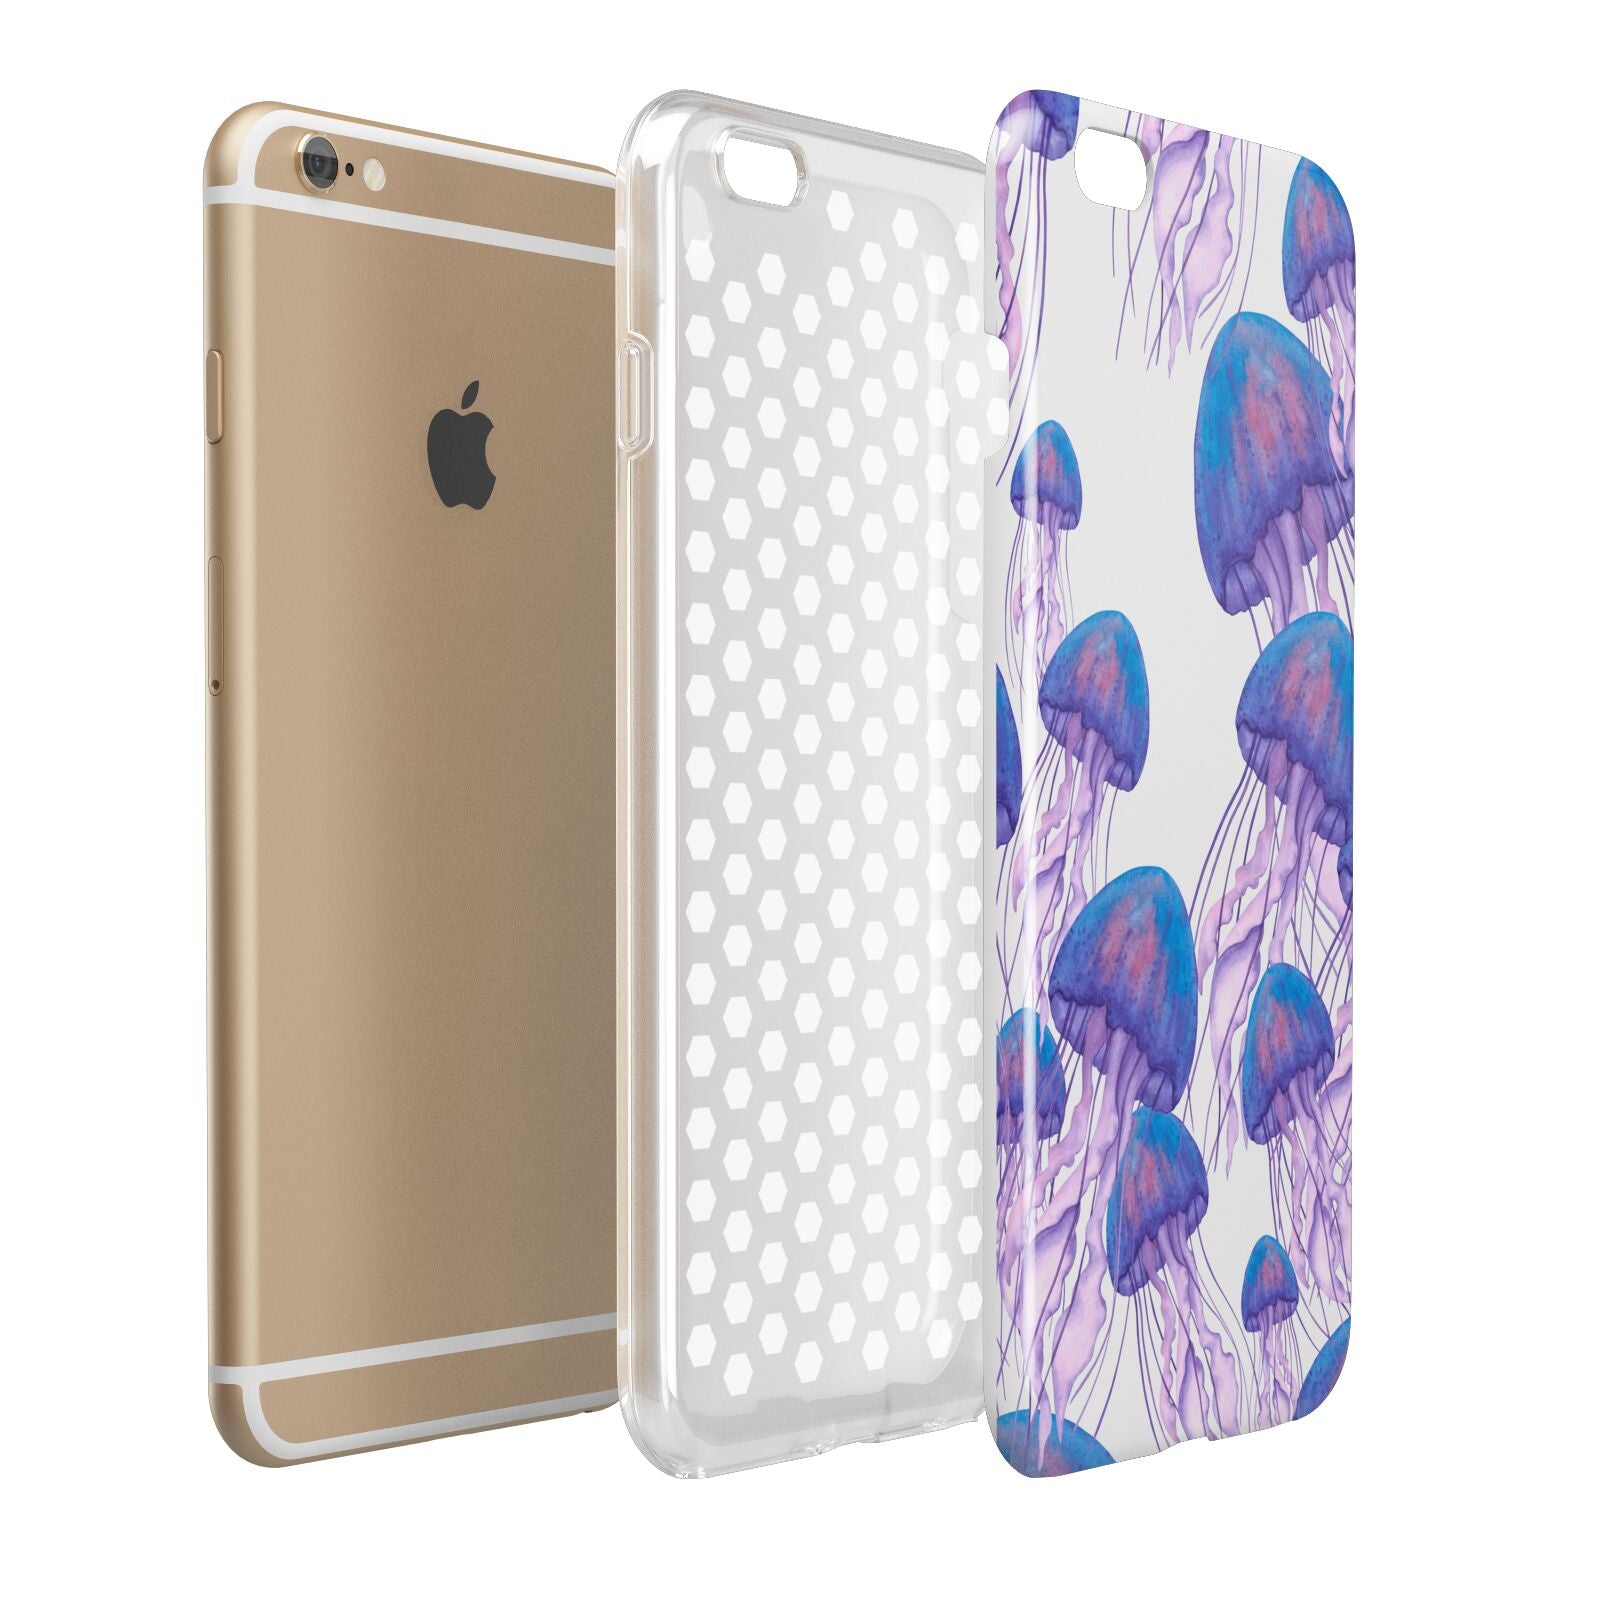 Jellyfish Apple iPhone 6 Plus 3D Tough Case Expand Detail Image